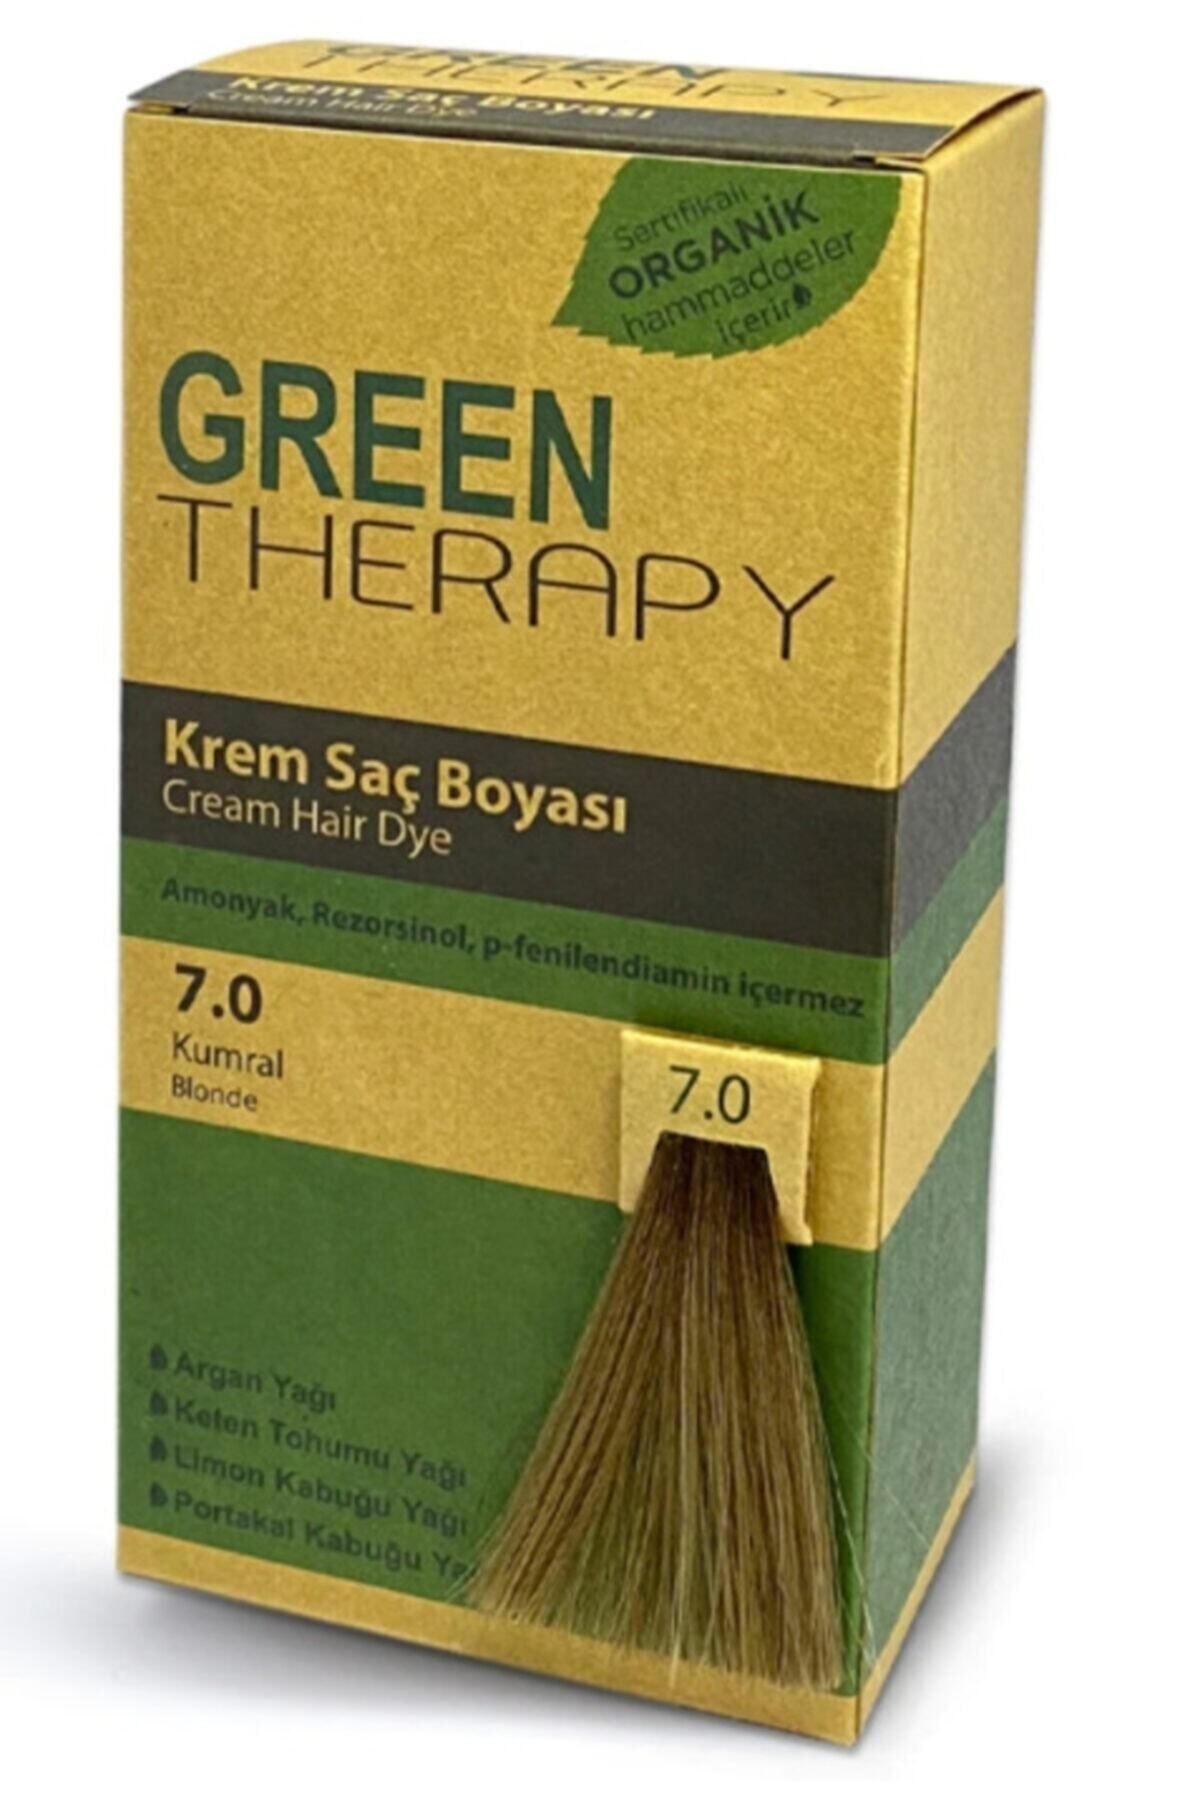 Green Therapy Krem Saç Boyası 7.0 Kumral